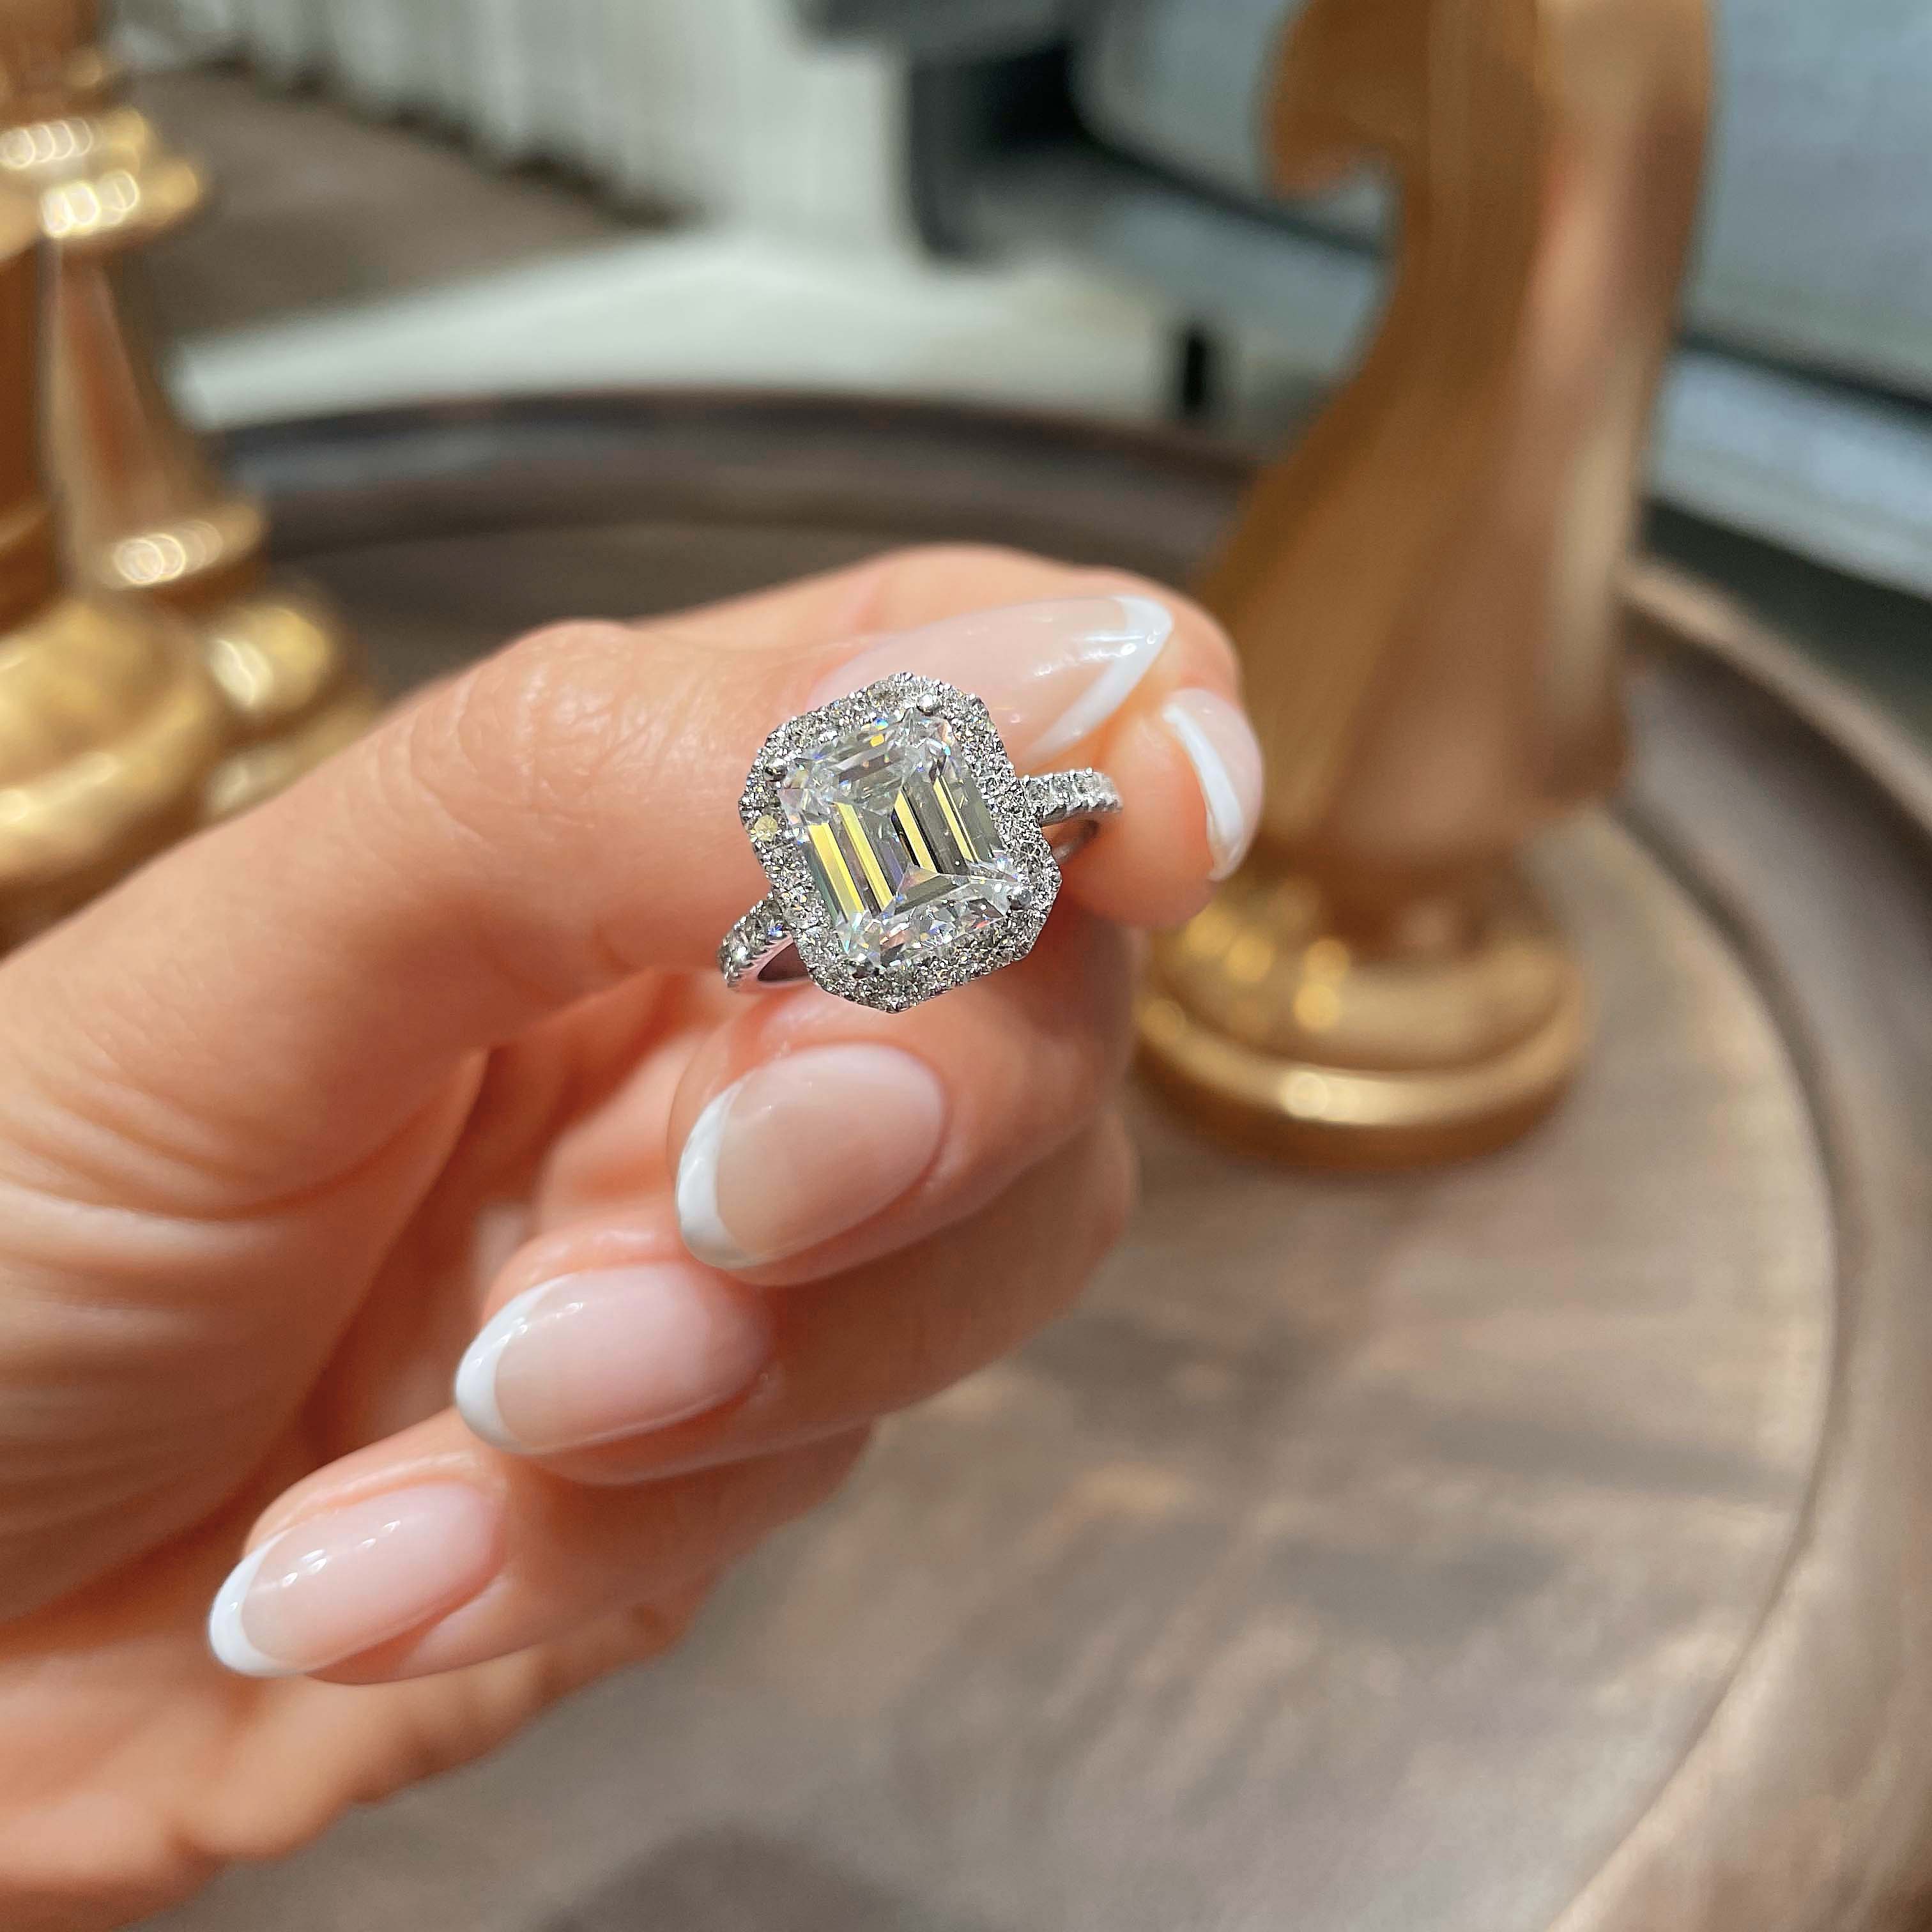 Zoey Moissanite & Diamonds Ring -18K White Gold